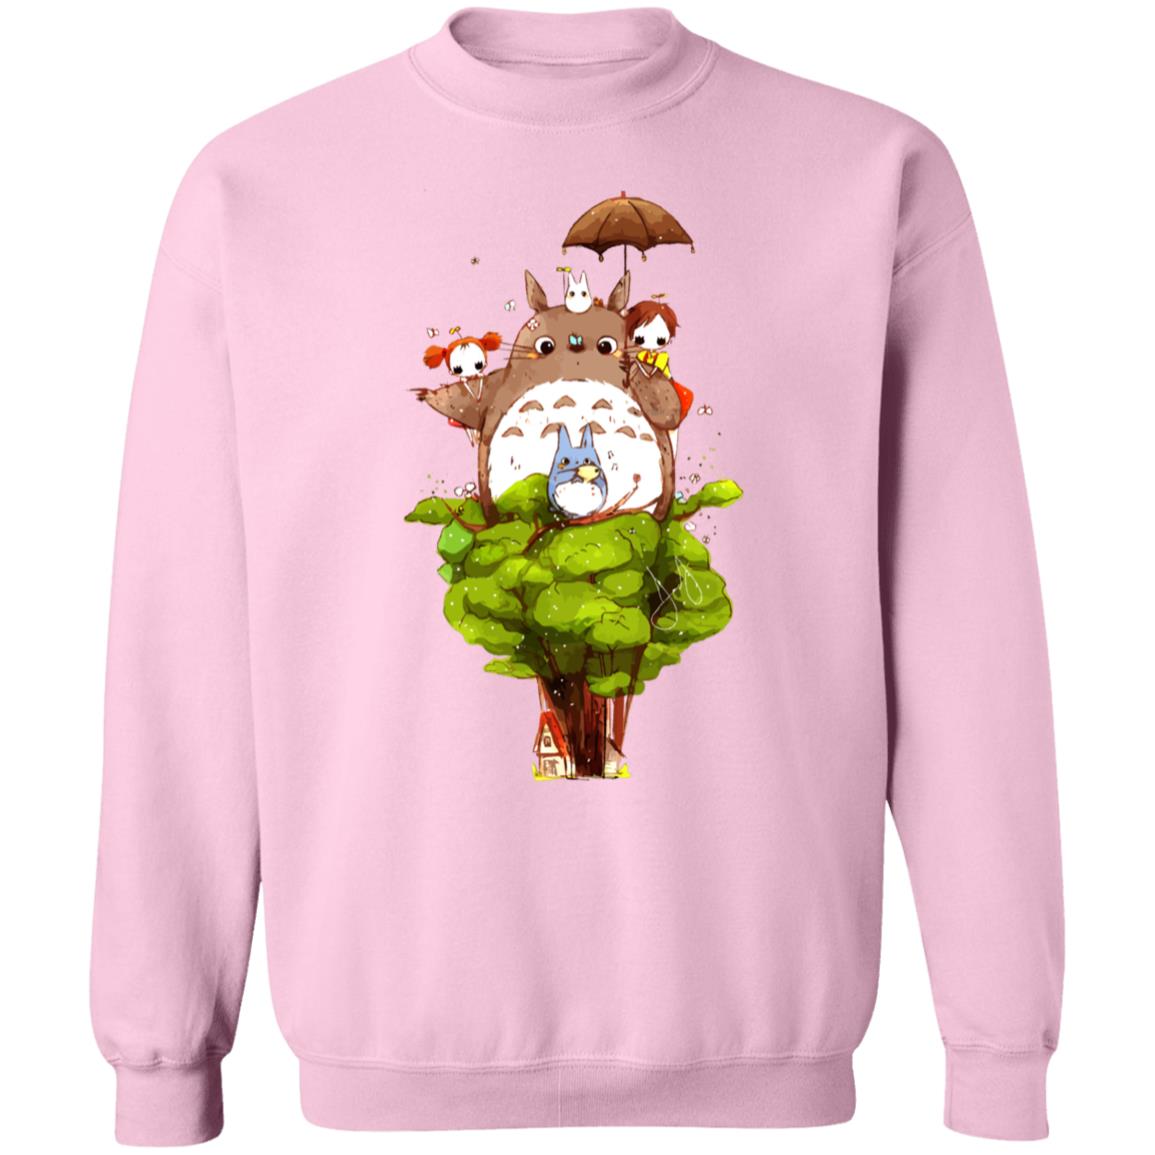 My Neighbor Totoro Characters cartoon Style Sweatshirt